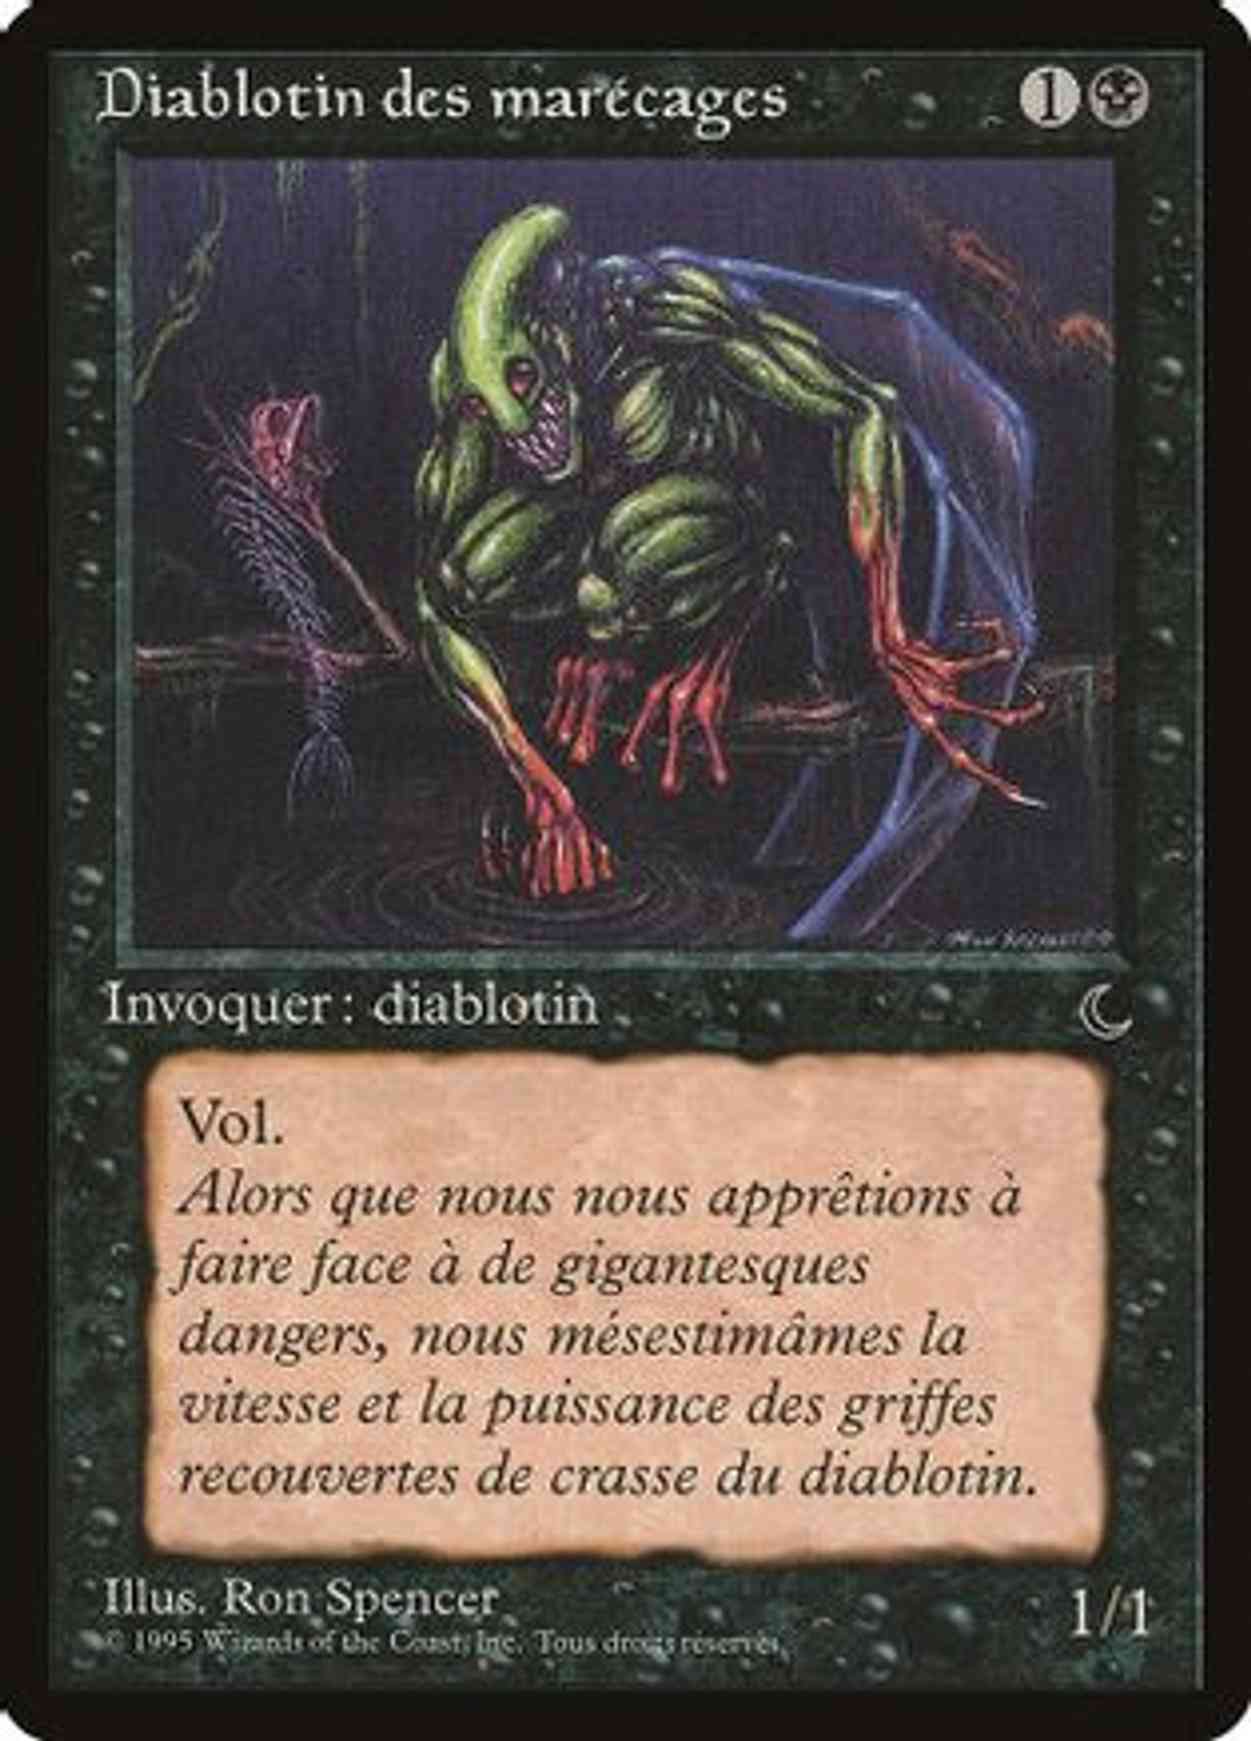 Bog Imp (French) - "Diablotin des marecages" magic card front